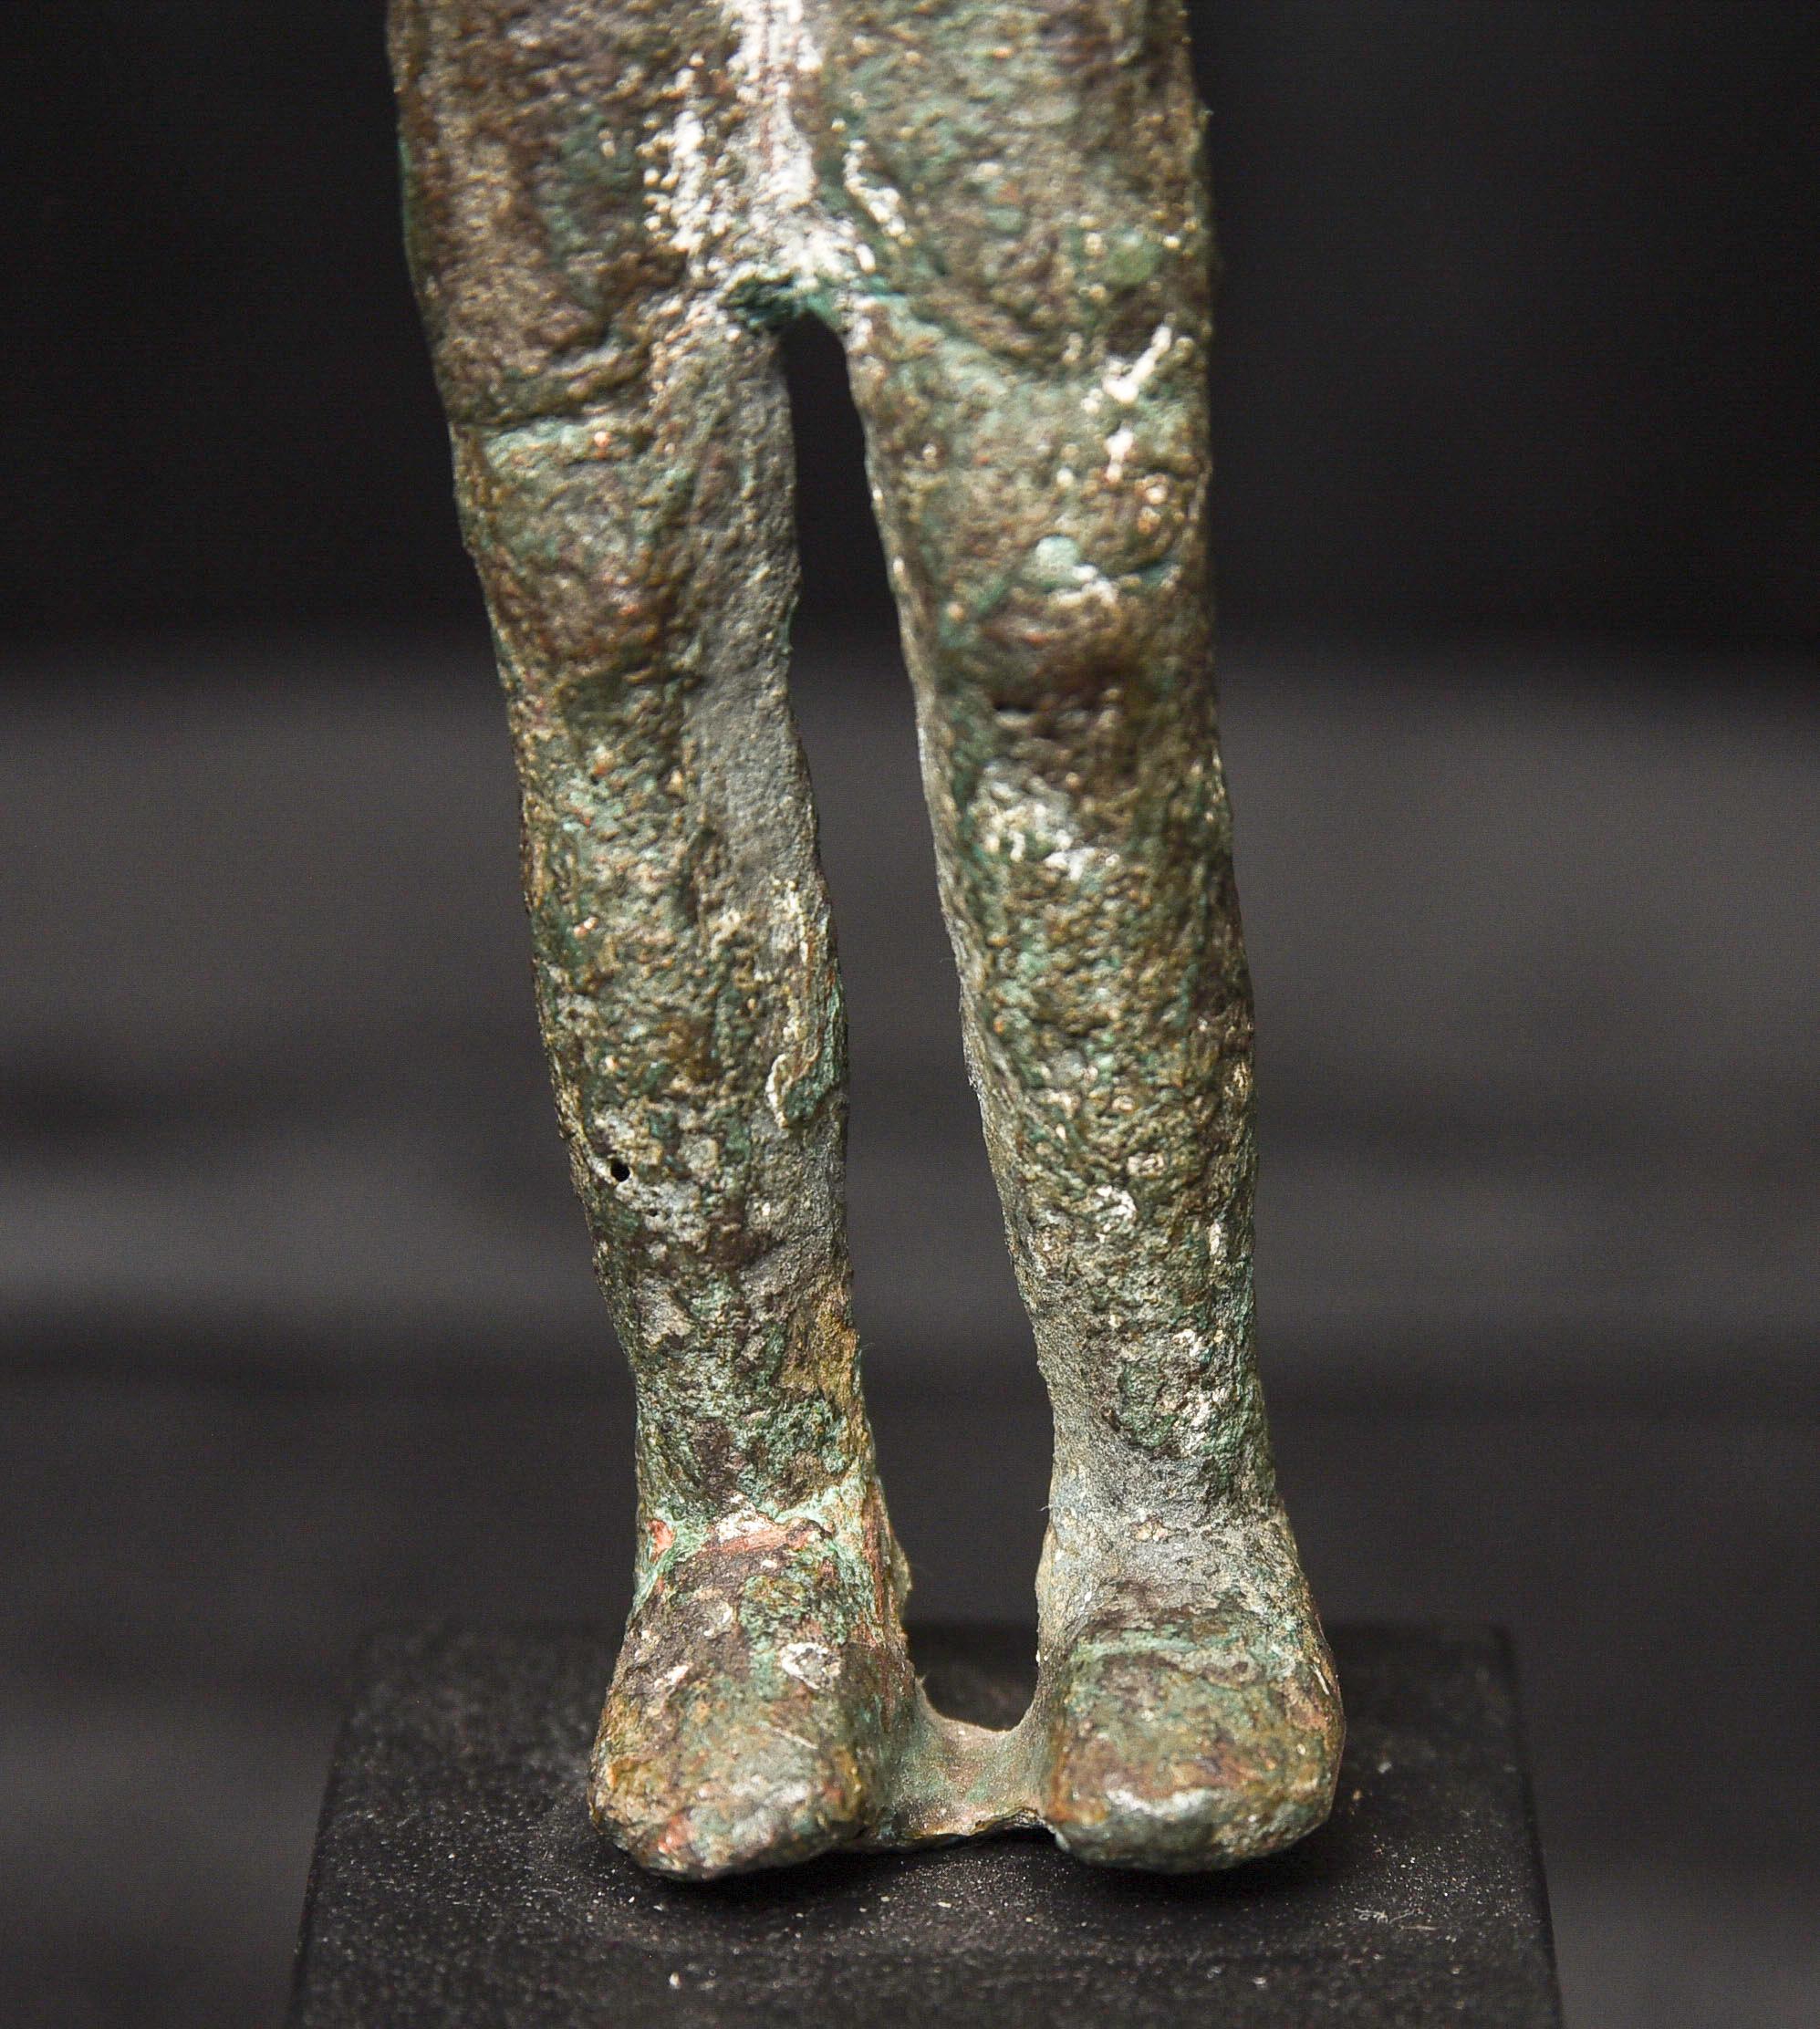 7th/9thC Solid-Cast Bronze Prakhon Chai Buddha or Bodhisattva - 9688 For Sale 7